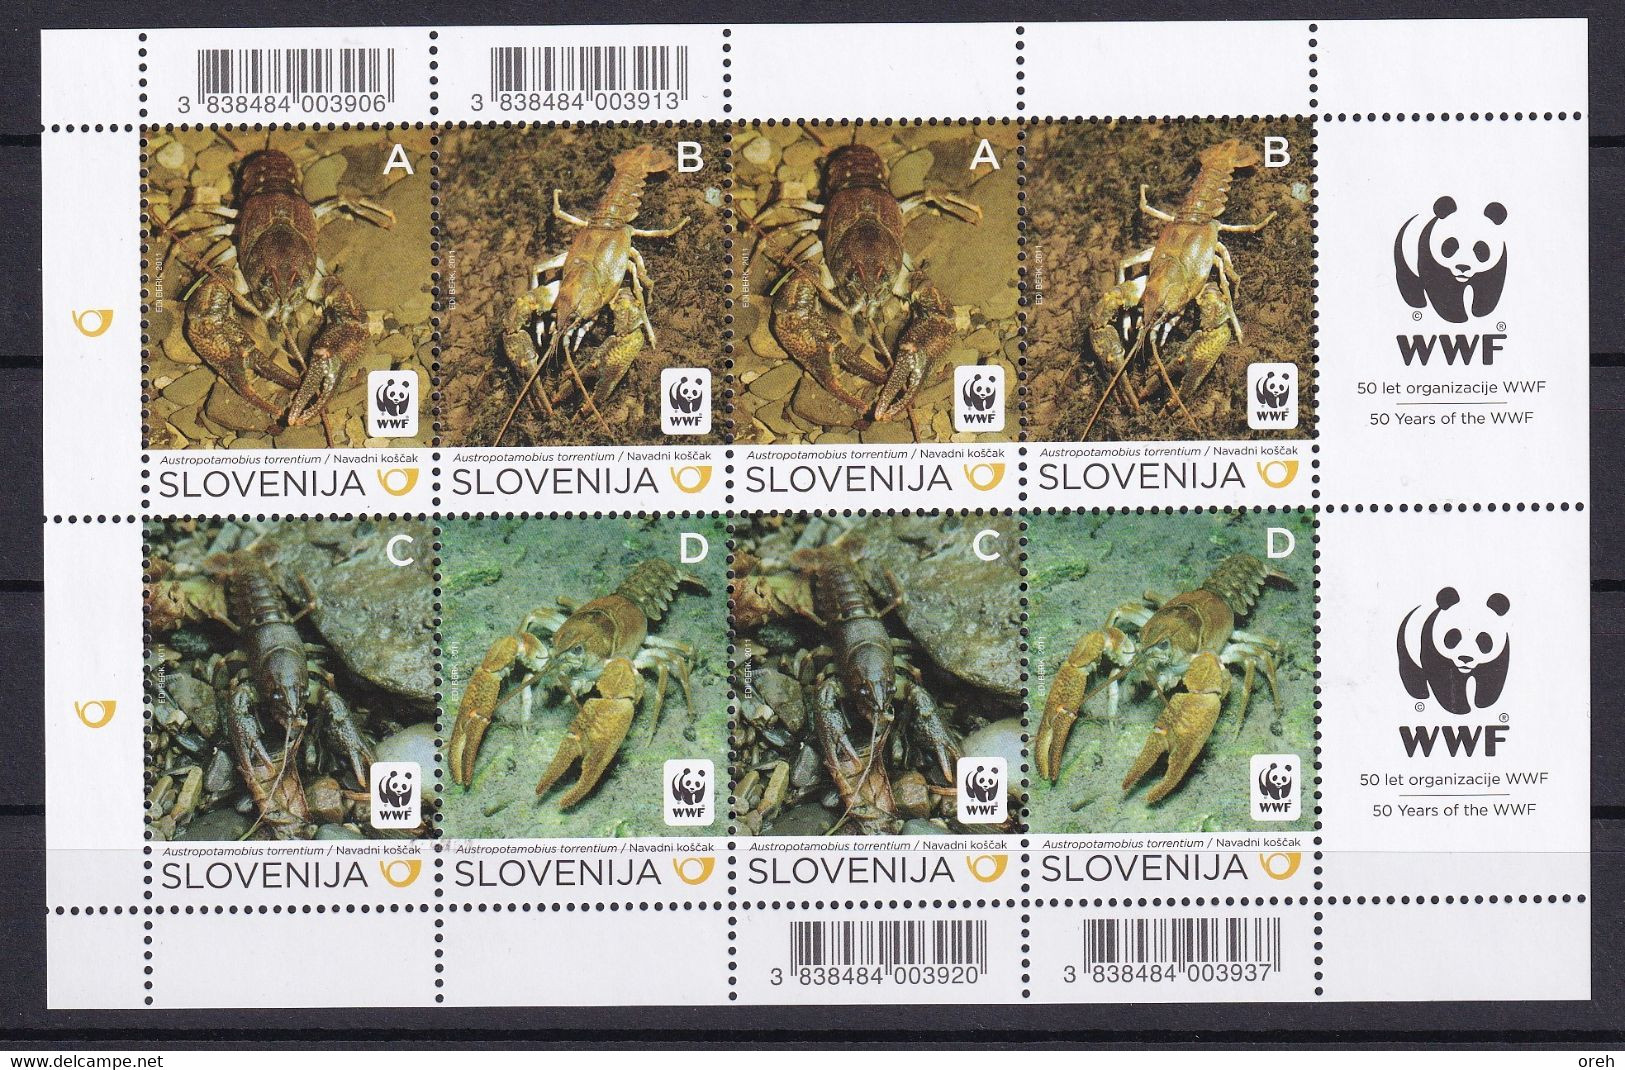 SLOVENIA 2011,WWF,STONE CRAYFISH,ANI MALS,AUSTROPOTAMOBIUS,MNH - Slowenien